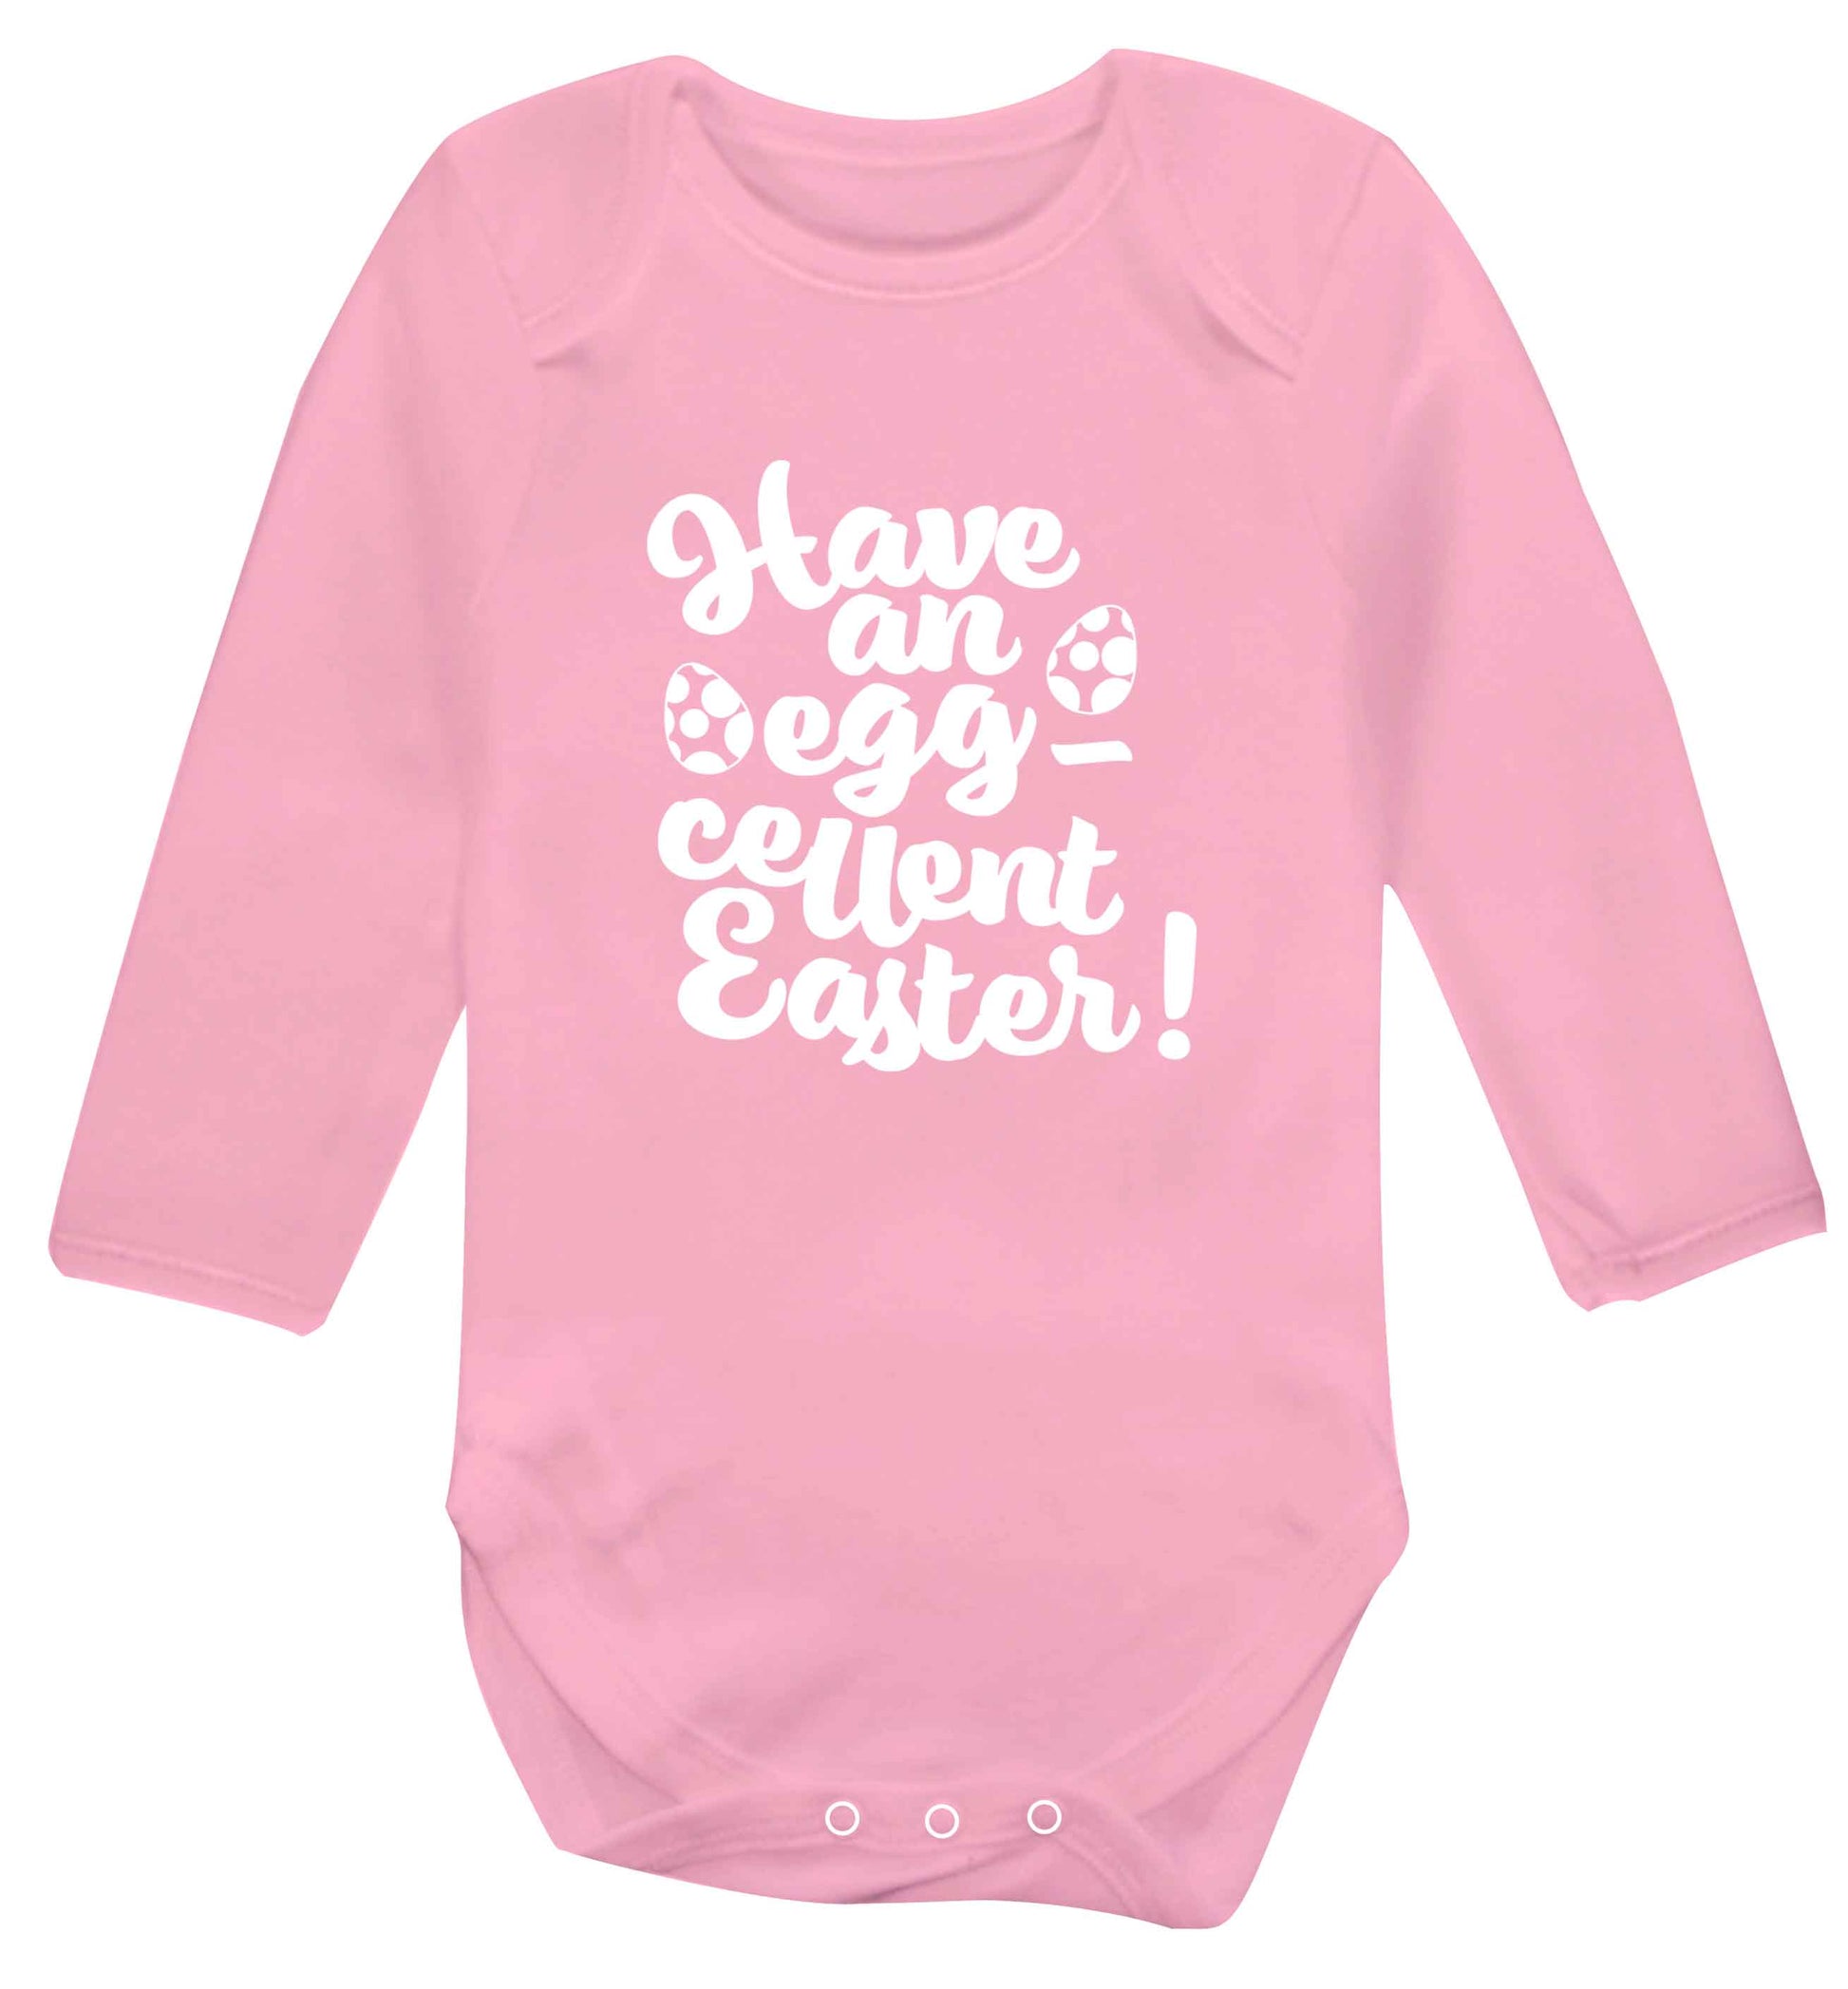 Have an eggcellent Easter baby vest long sleeved pale pink 6-12 months